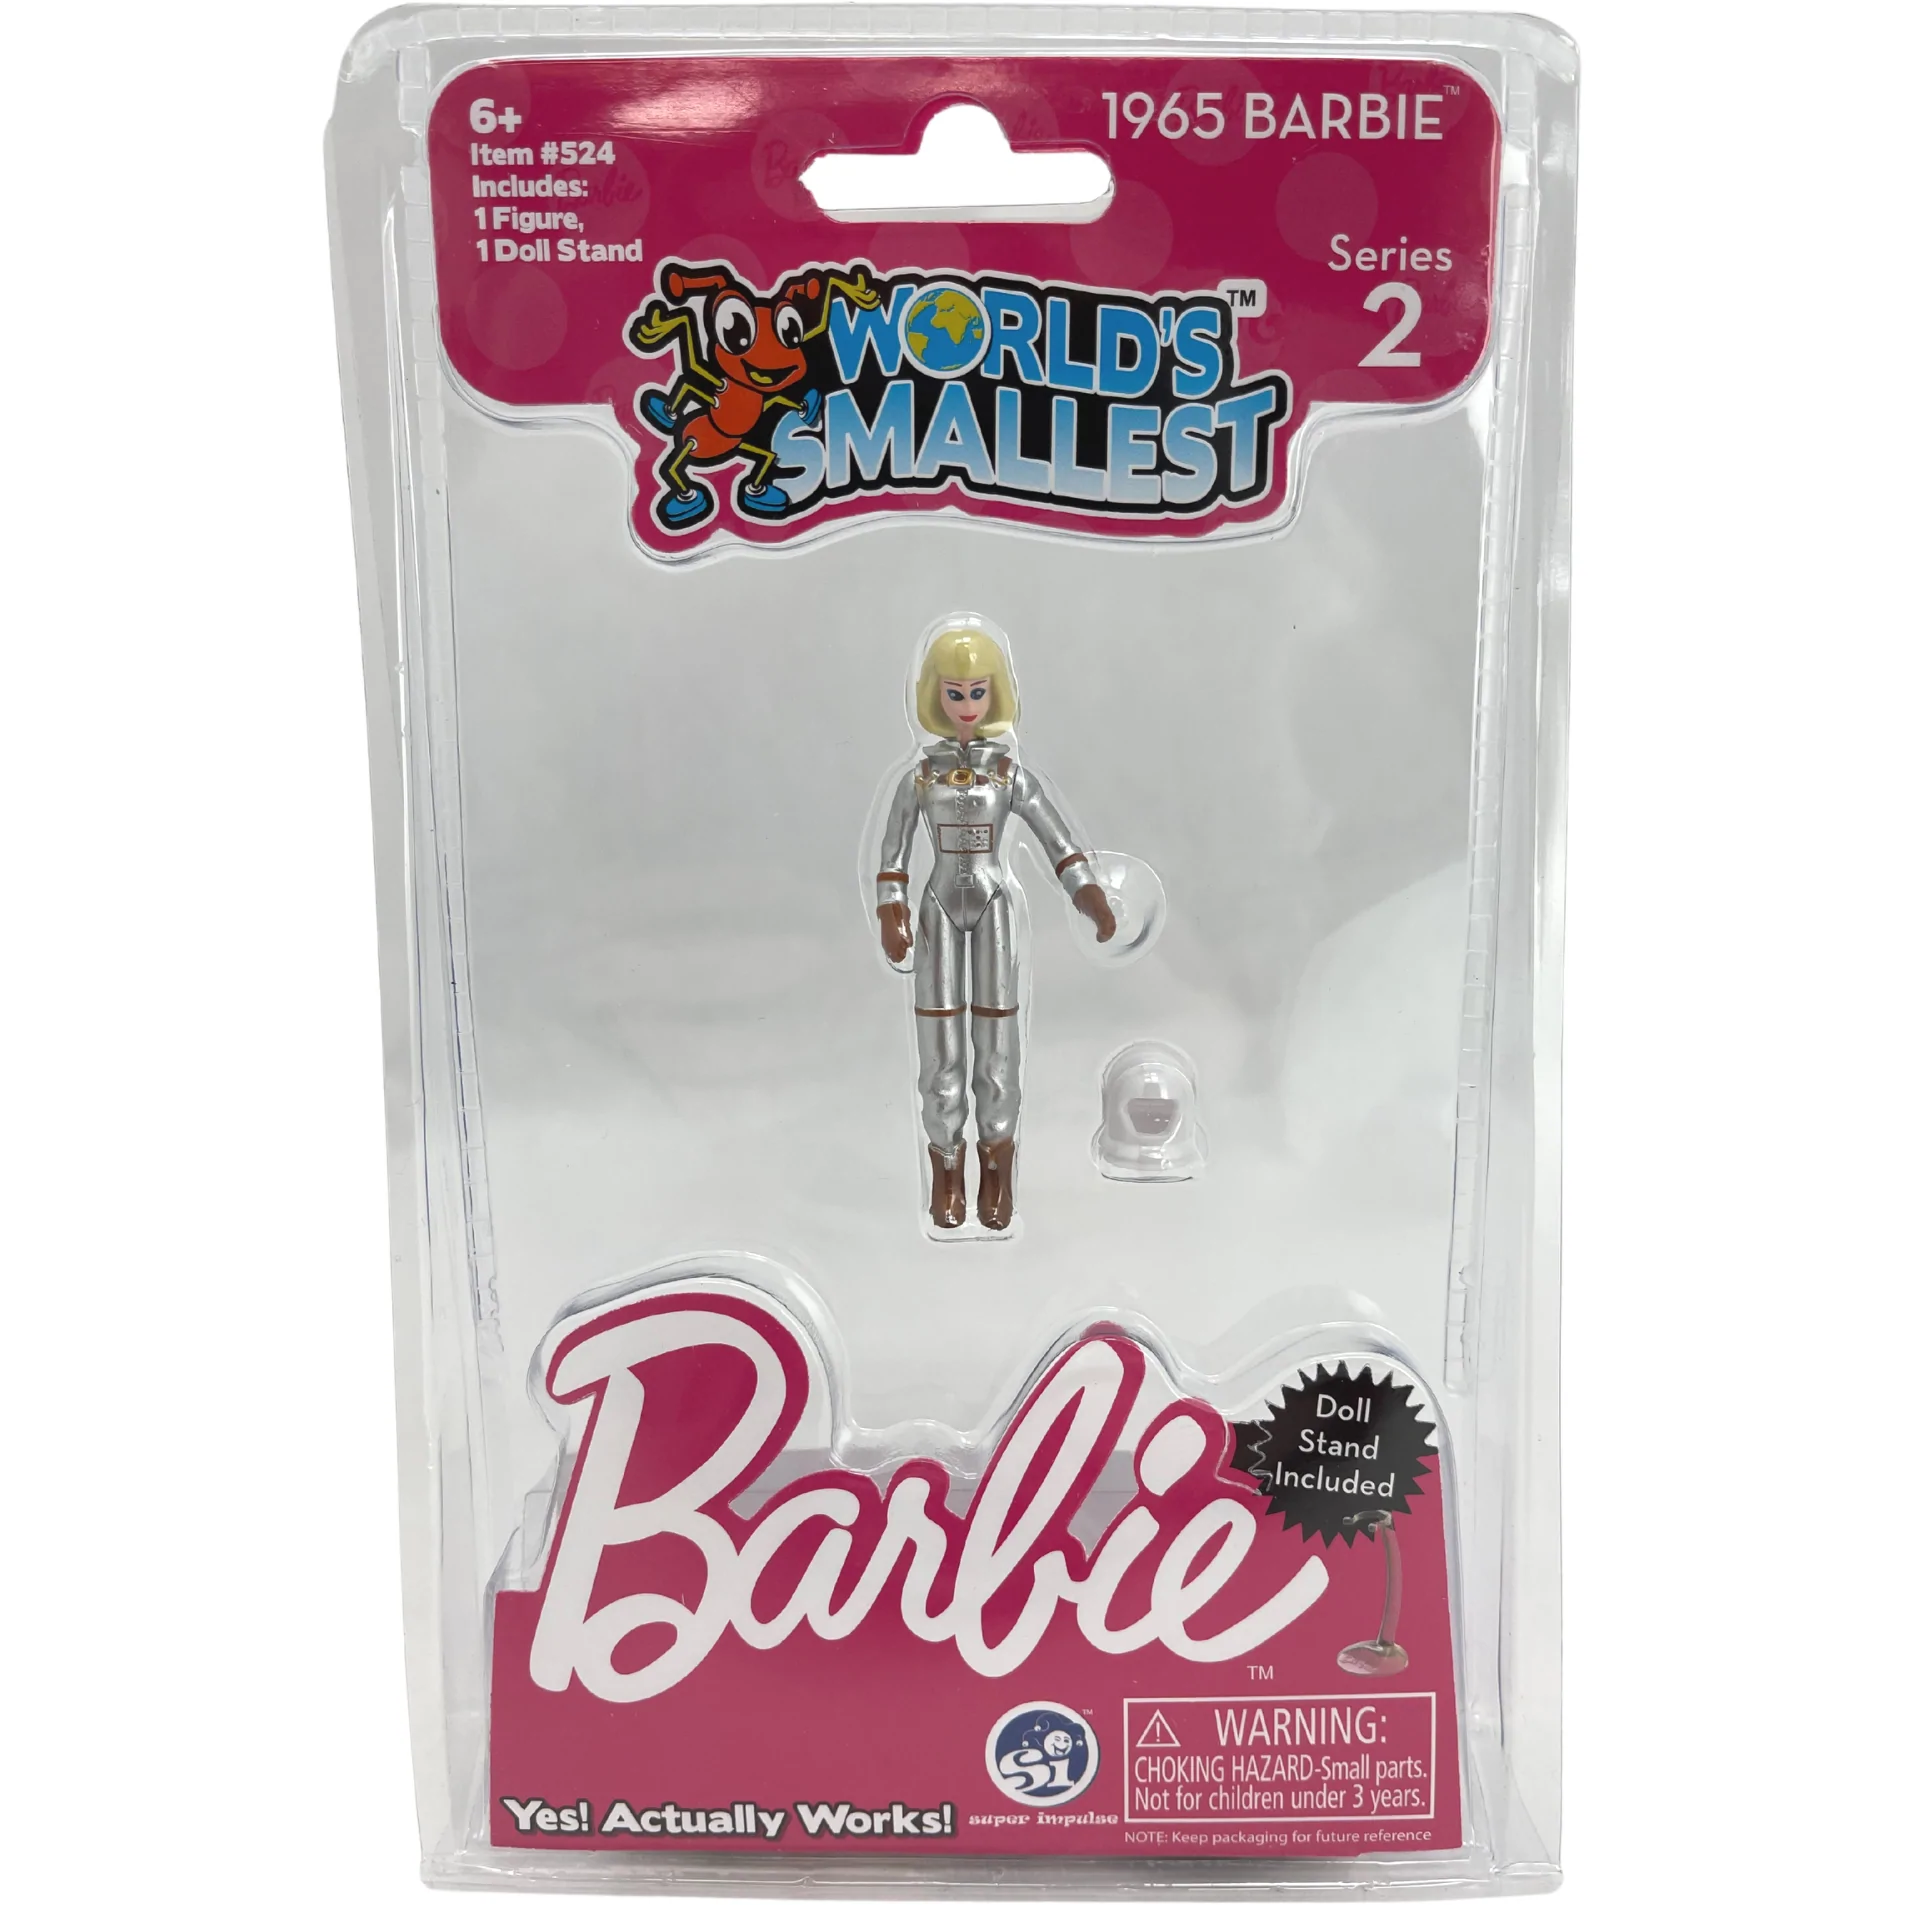 Mattel World's Smallest Barbie Doll / 1965 Barbie / Series 2 / Travel Size Toy